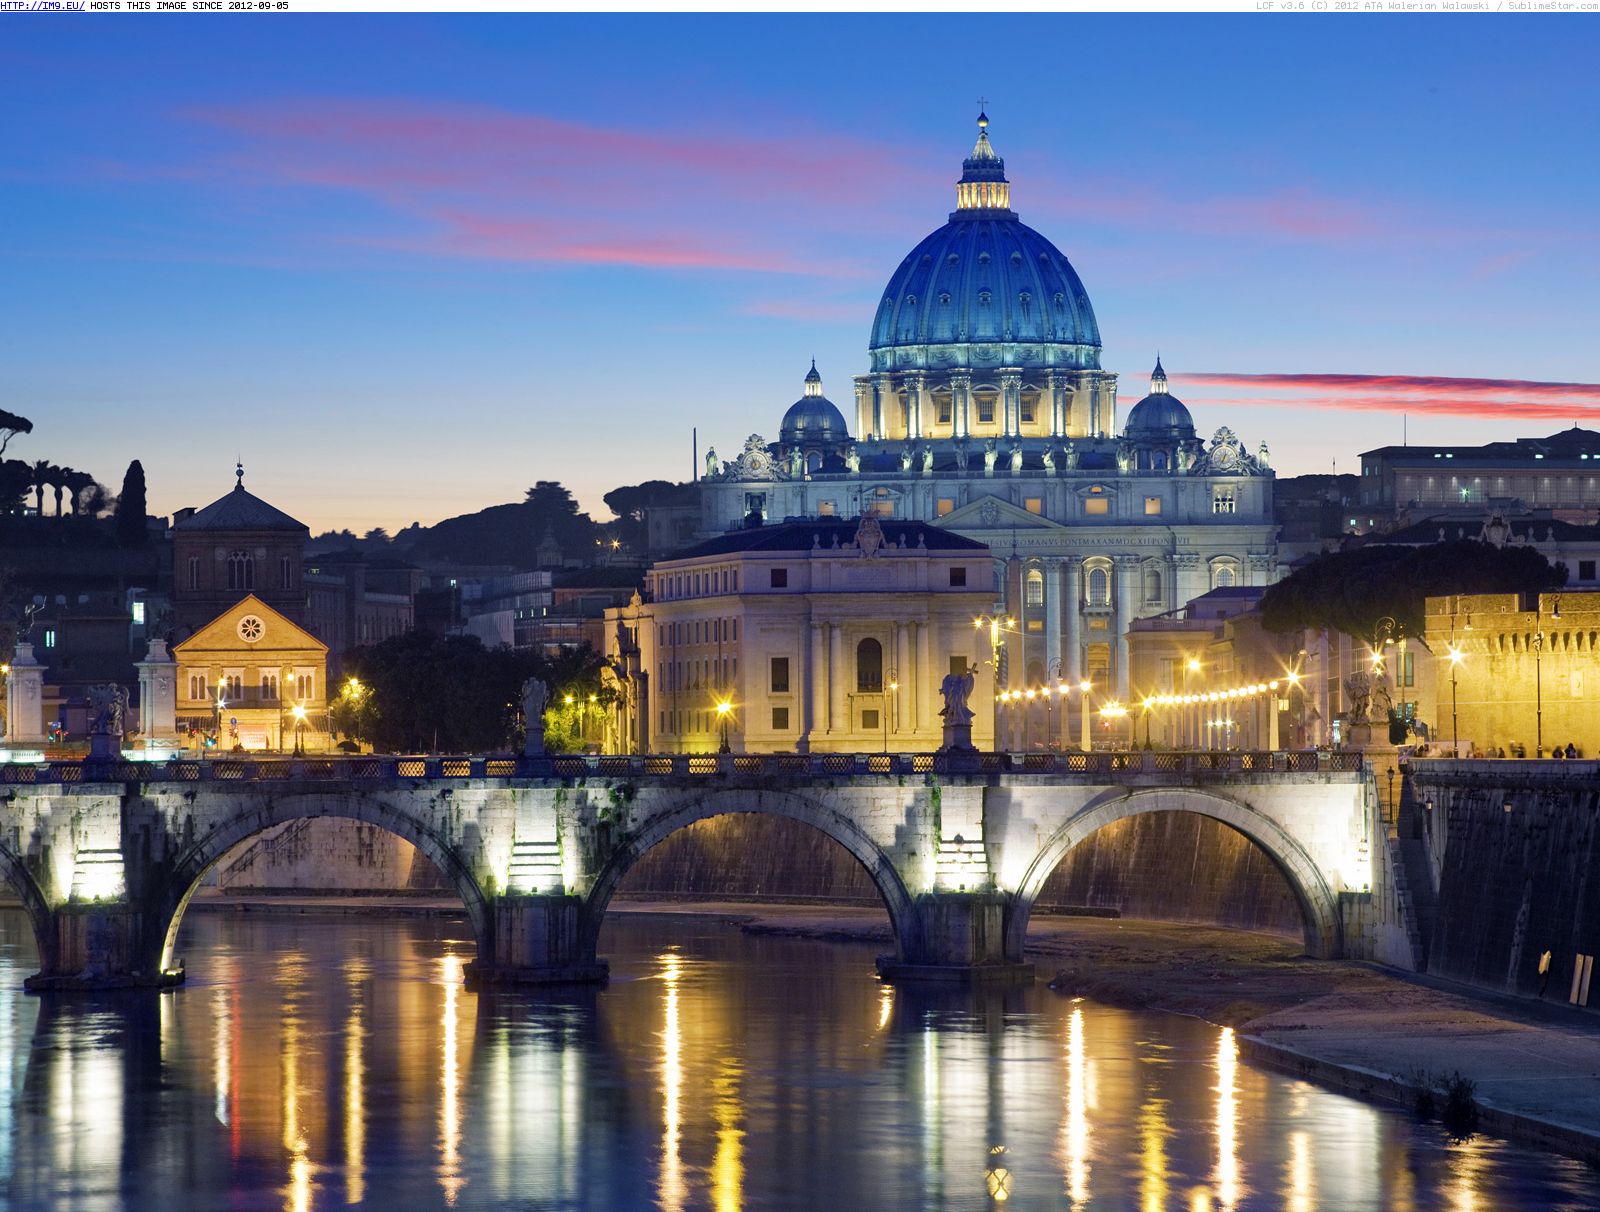 #Wallpaper #Beautiful #Wide #Vatican #Peter #Basilica #Tiber #City #River #Clouds St. Peter's Basilica, Tiber River, Vatican City Pic. (Bild von album Beautiful photos and wallpapers))